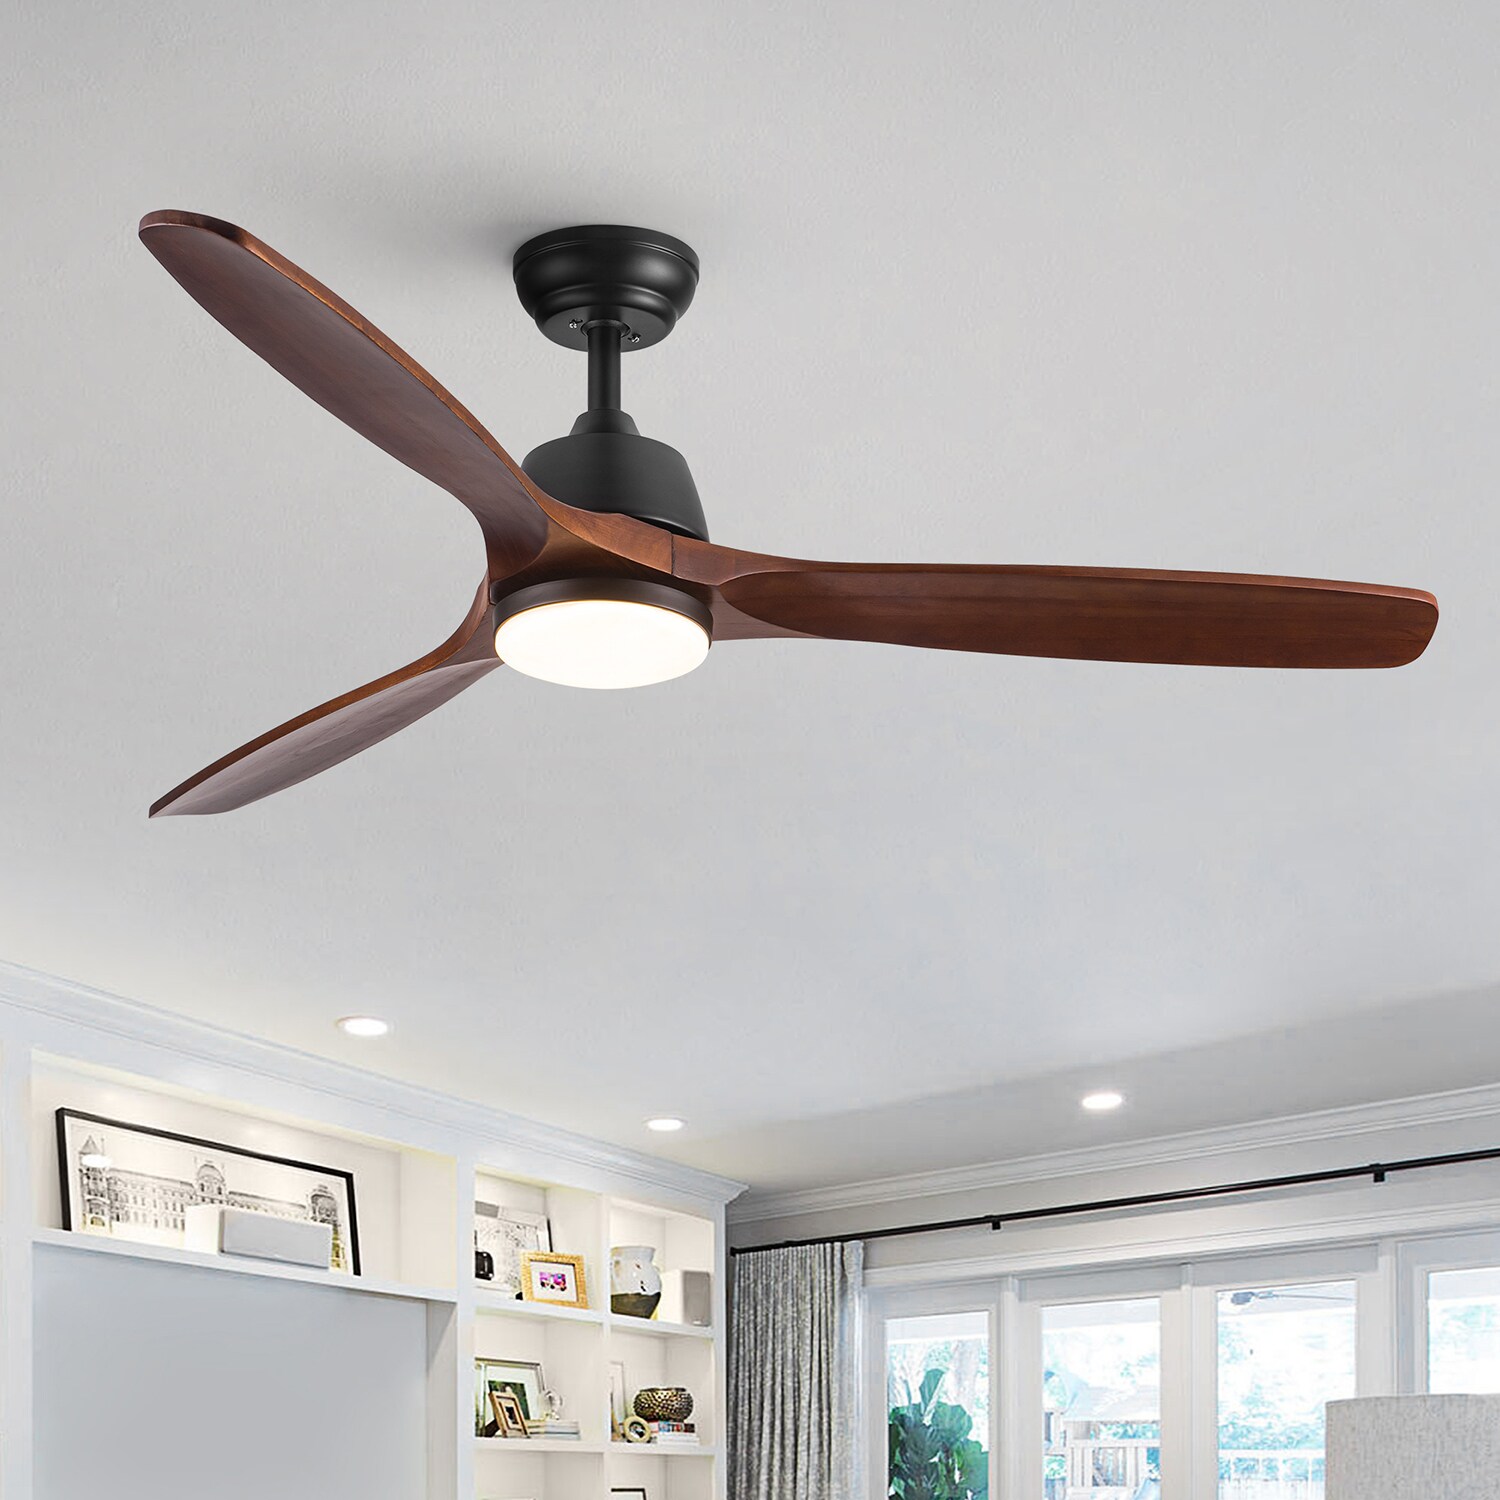 SINOFURN 52-in Black Color-changing Indoor Ceiling Fan Light Kit 